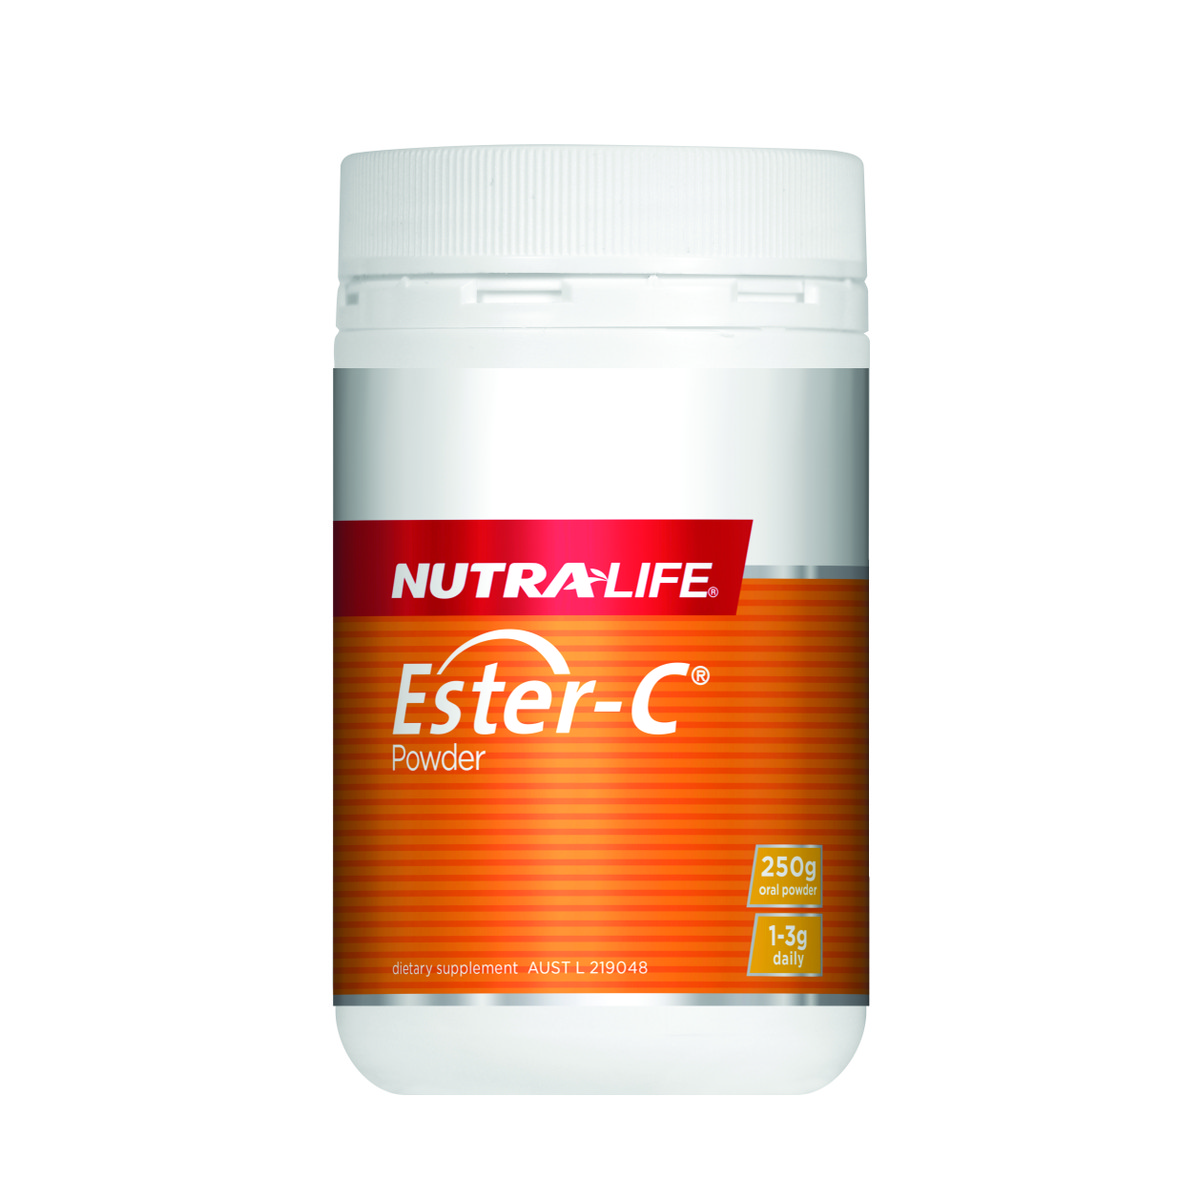 NutraLife Ester-C Powder 250g